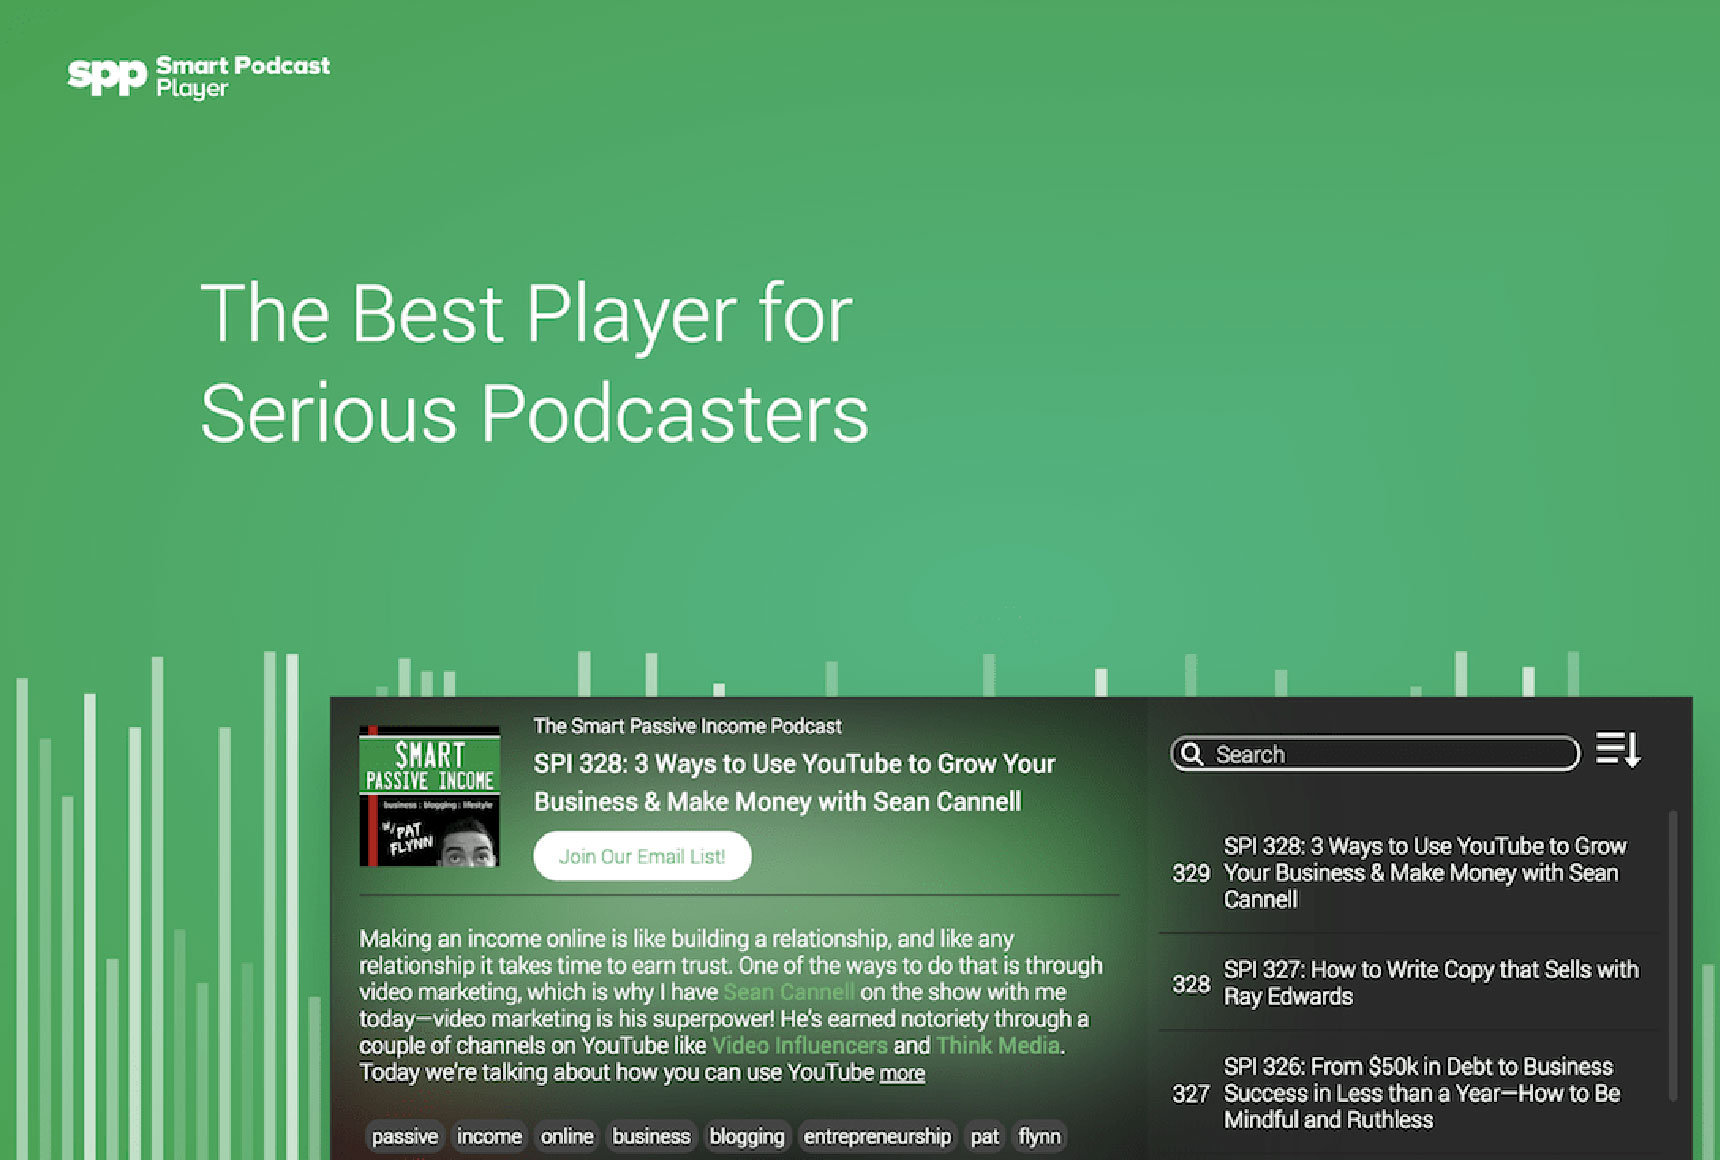 Smart Podcast Player masthead image